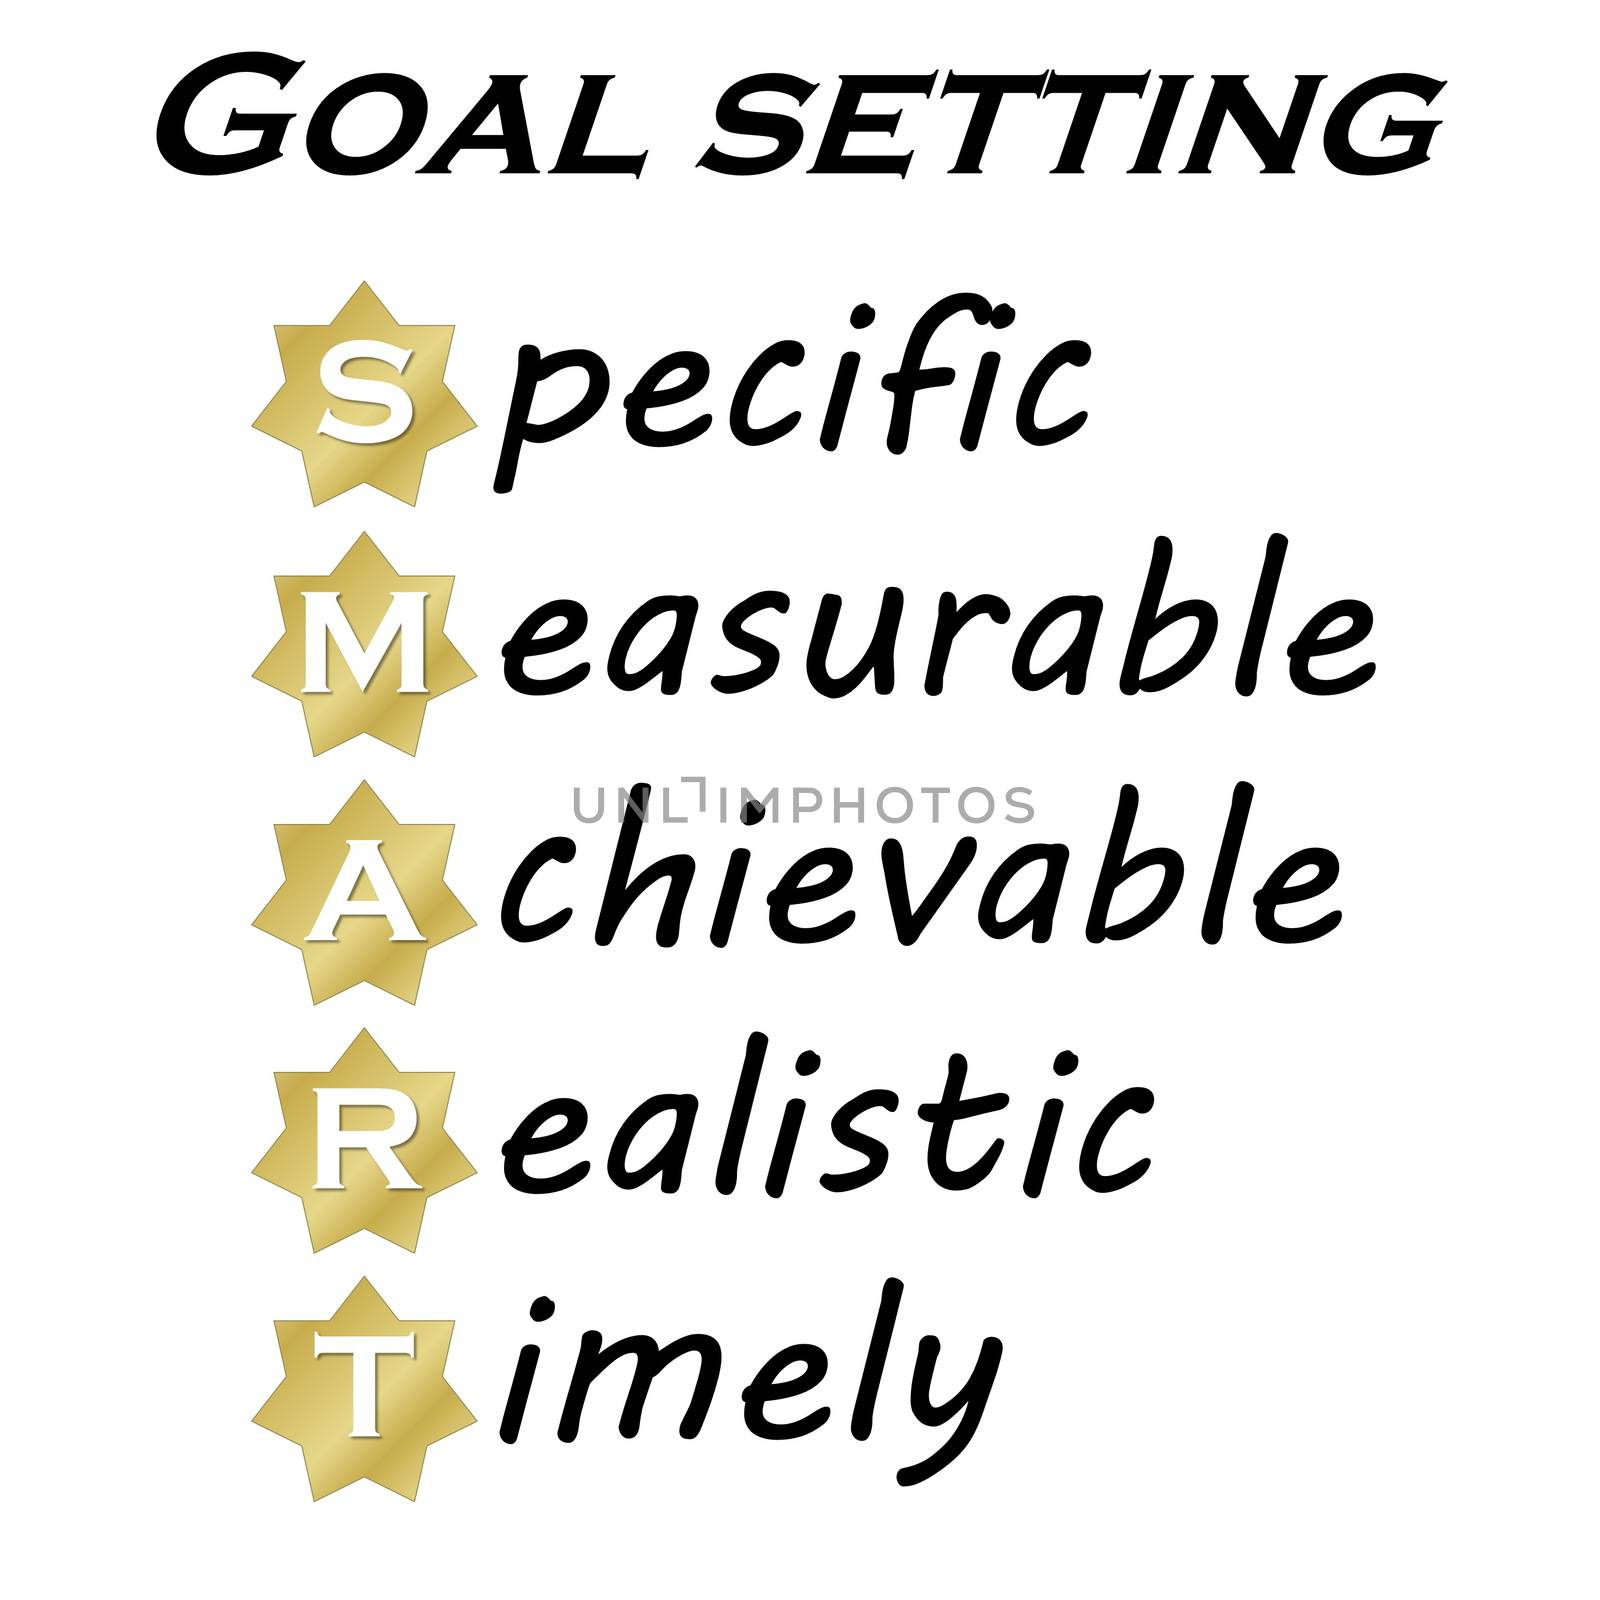 SMART goal setting diagram by Elenaphotos21